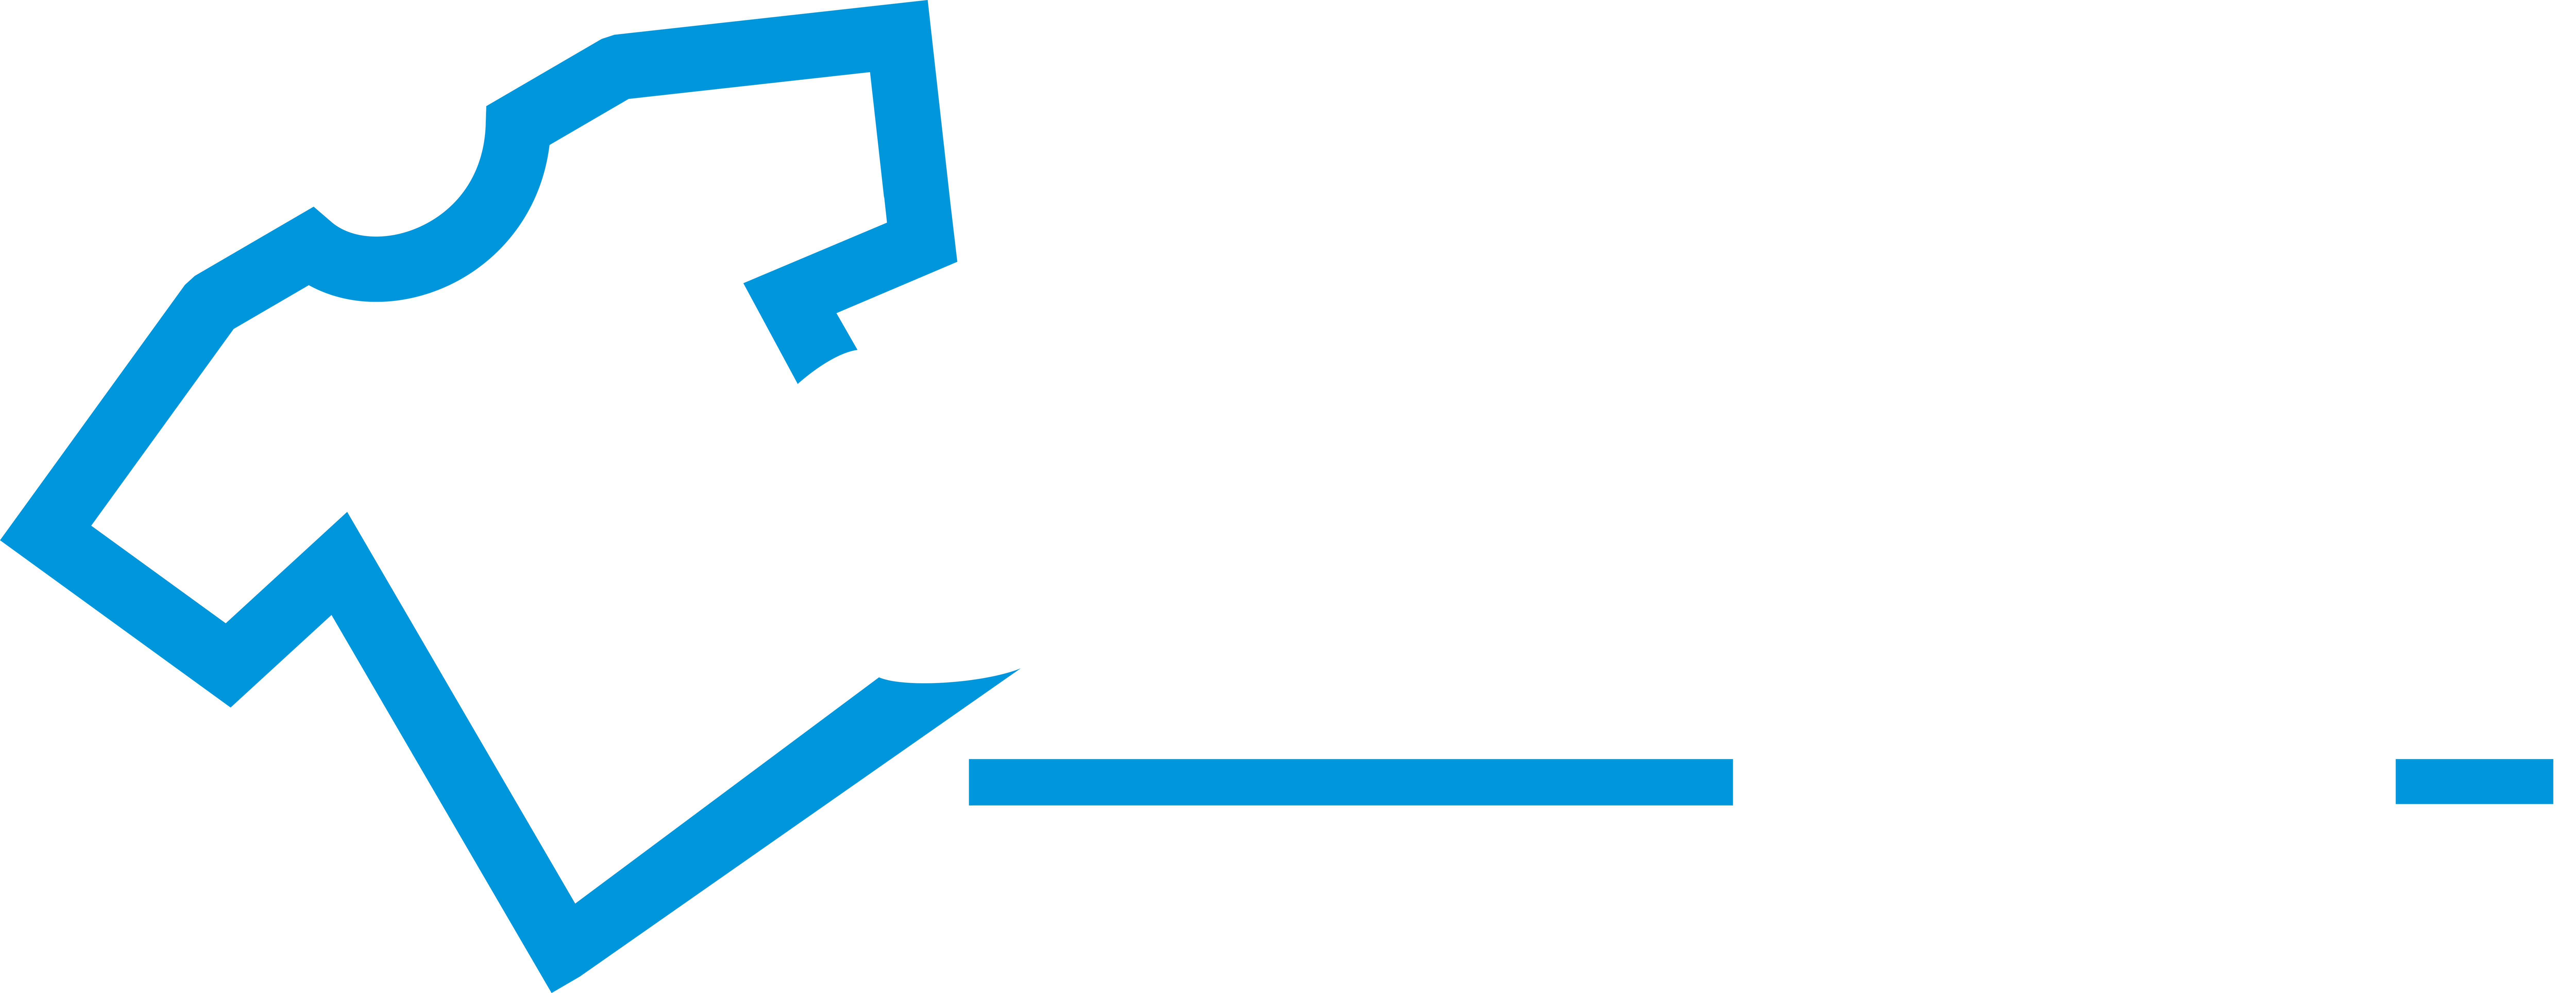 Custom Tees Direct logo